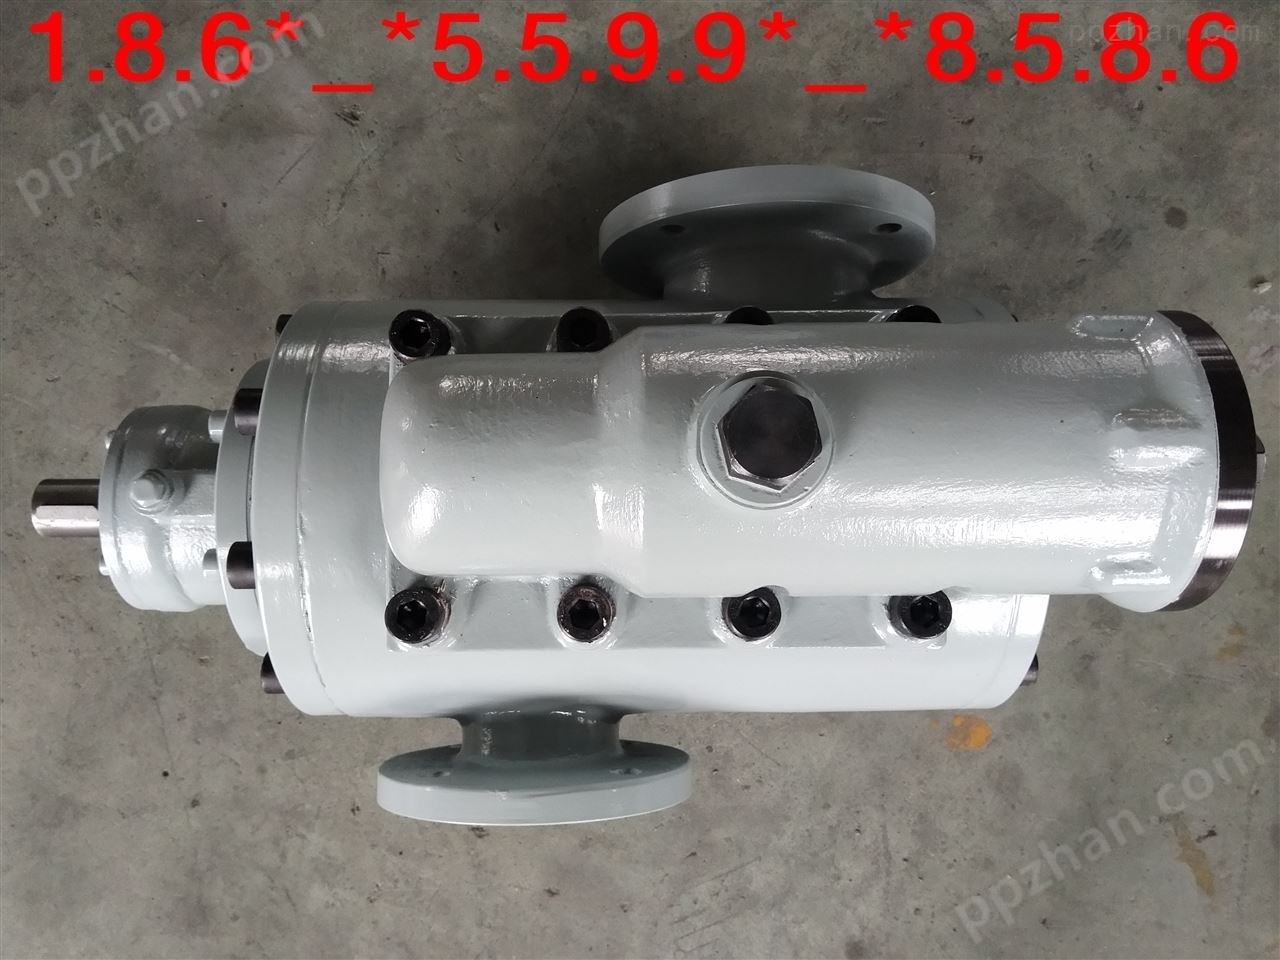 HSG440×2-46黄山螺杆泵寿命